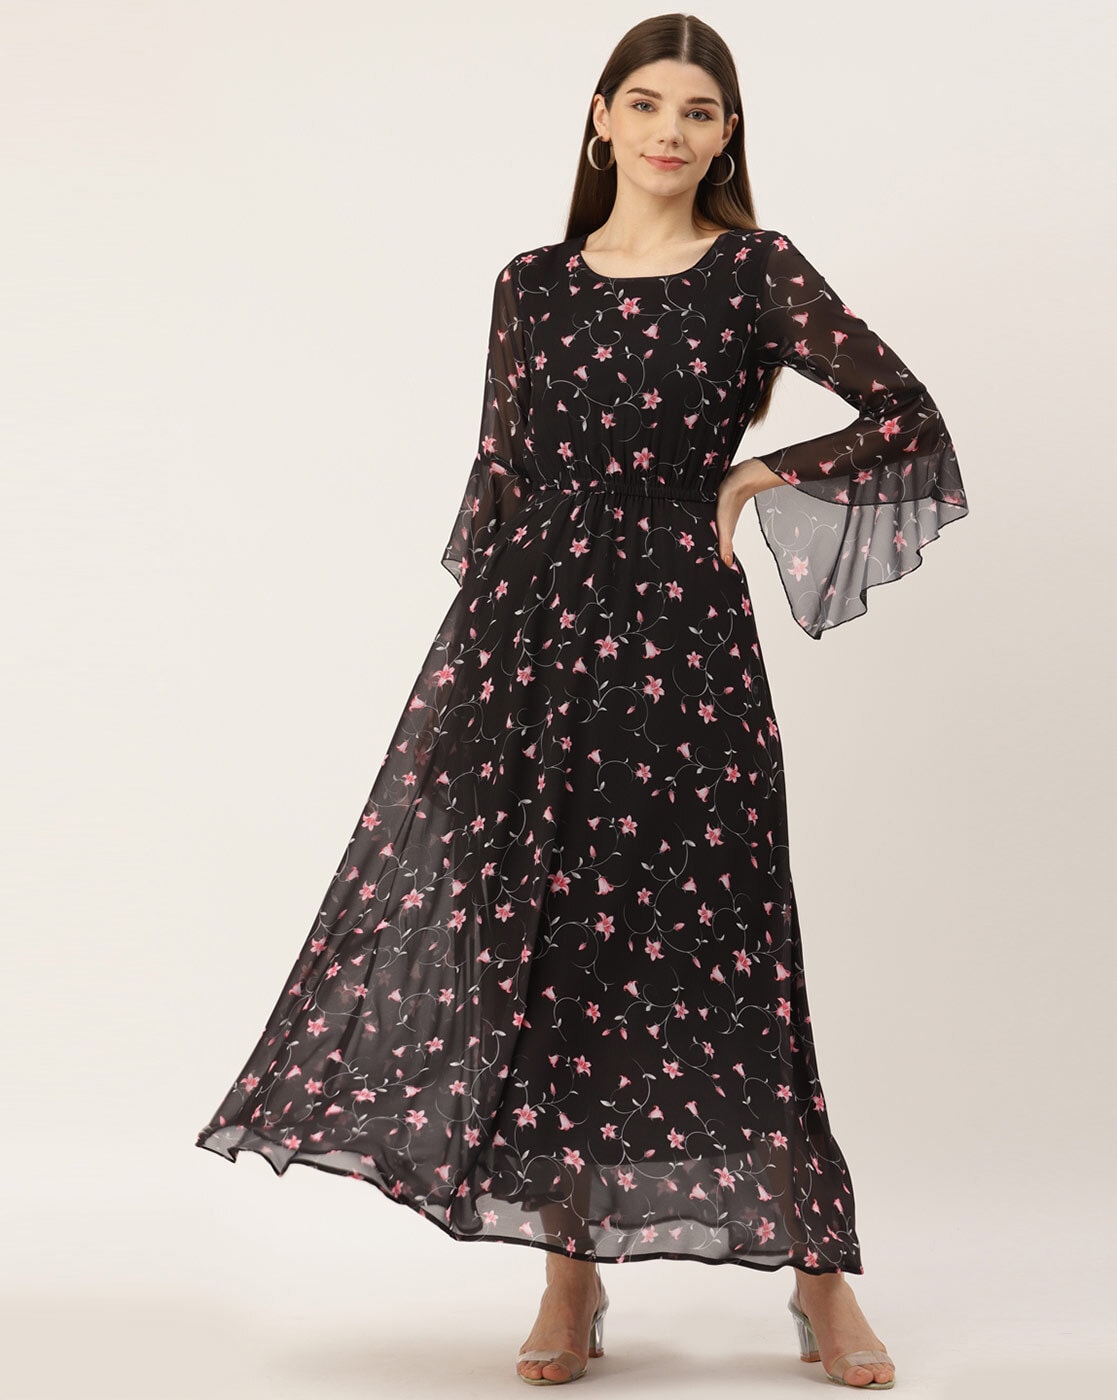 Black Floral Plus Size Dress Online in India | Amydus